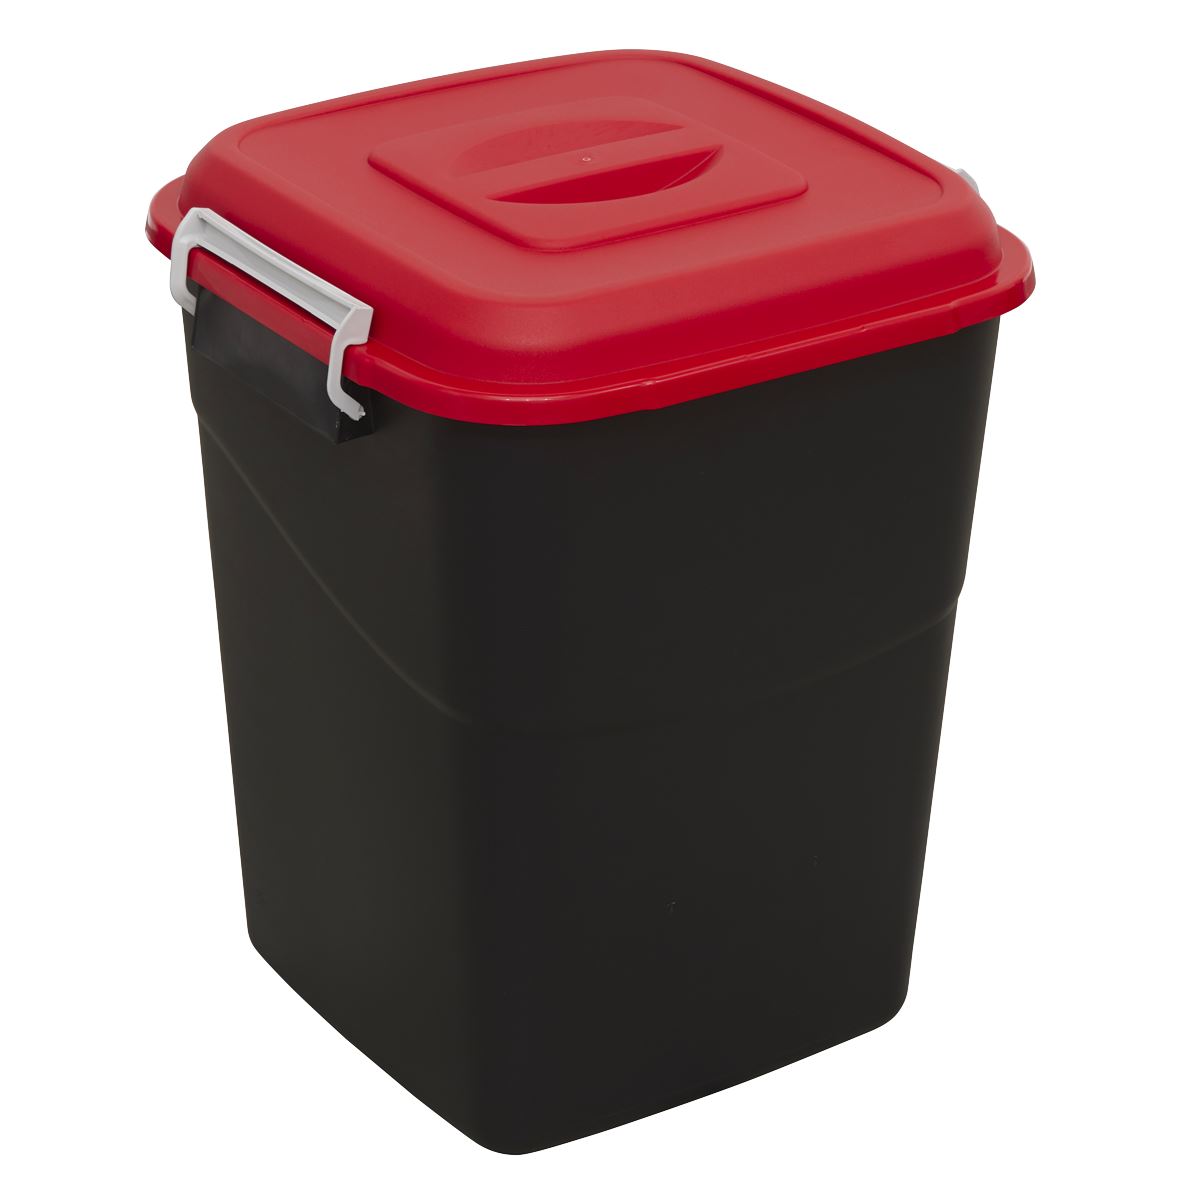 Sealey Refuse/Storage Bin 50L - Red